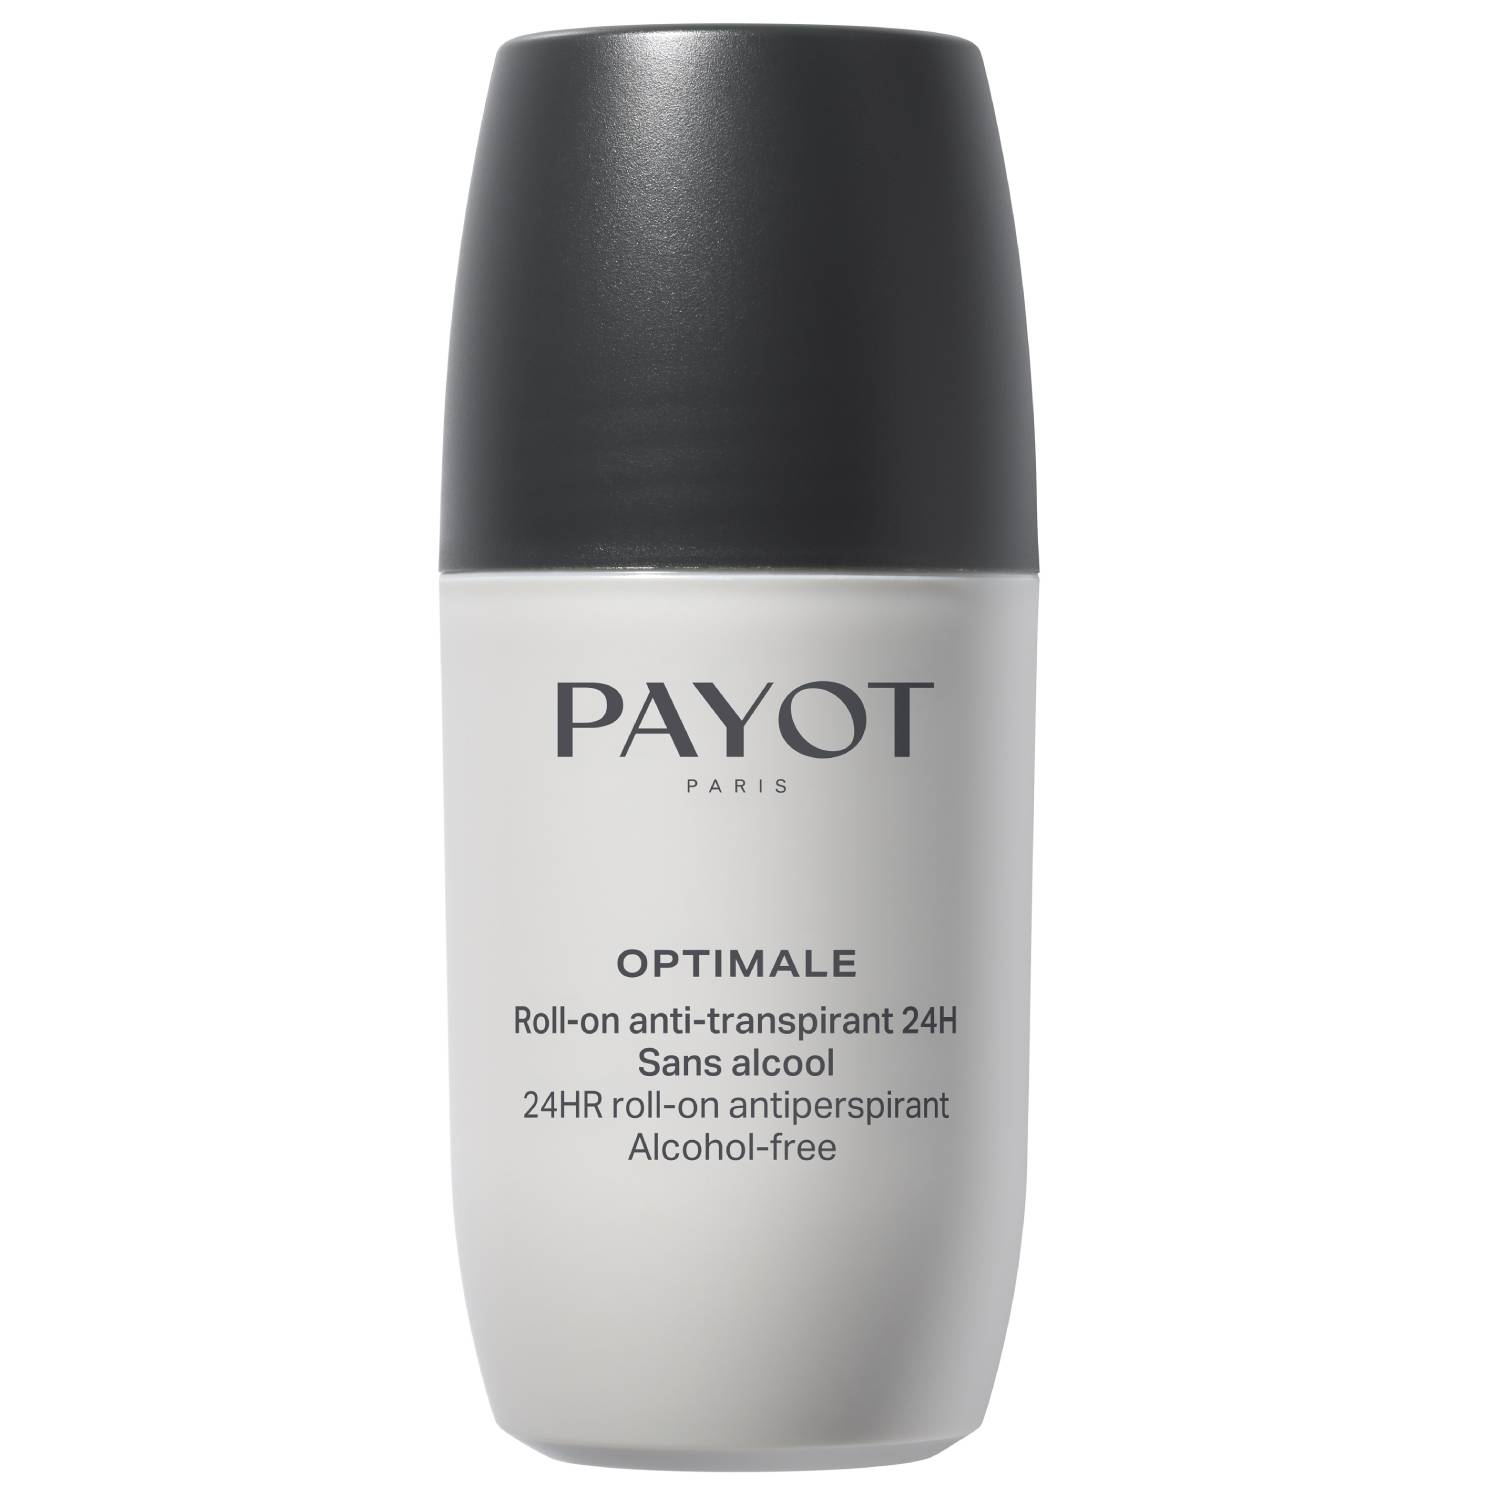 цена Payot Роликовый дезодорант-антиперспирант 24 часа для мужчин, 75 мл (Payot, Optimale)